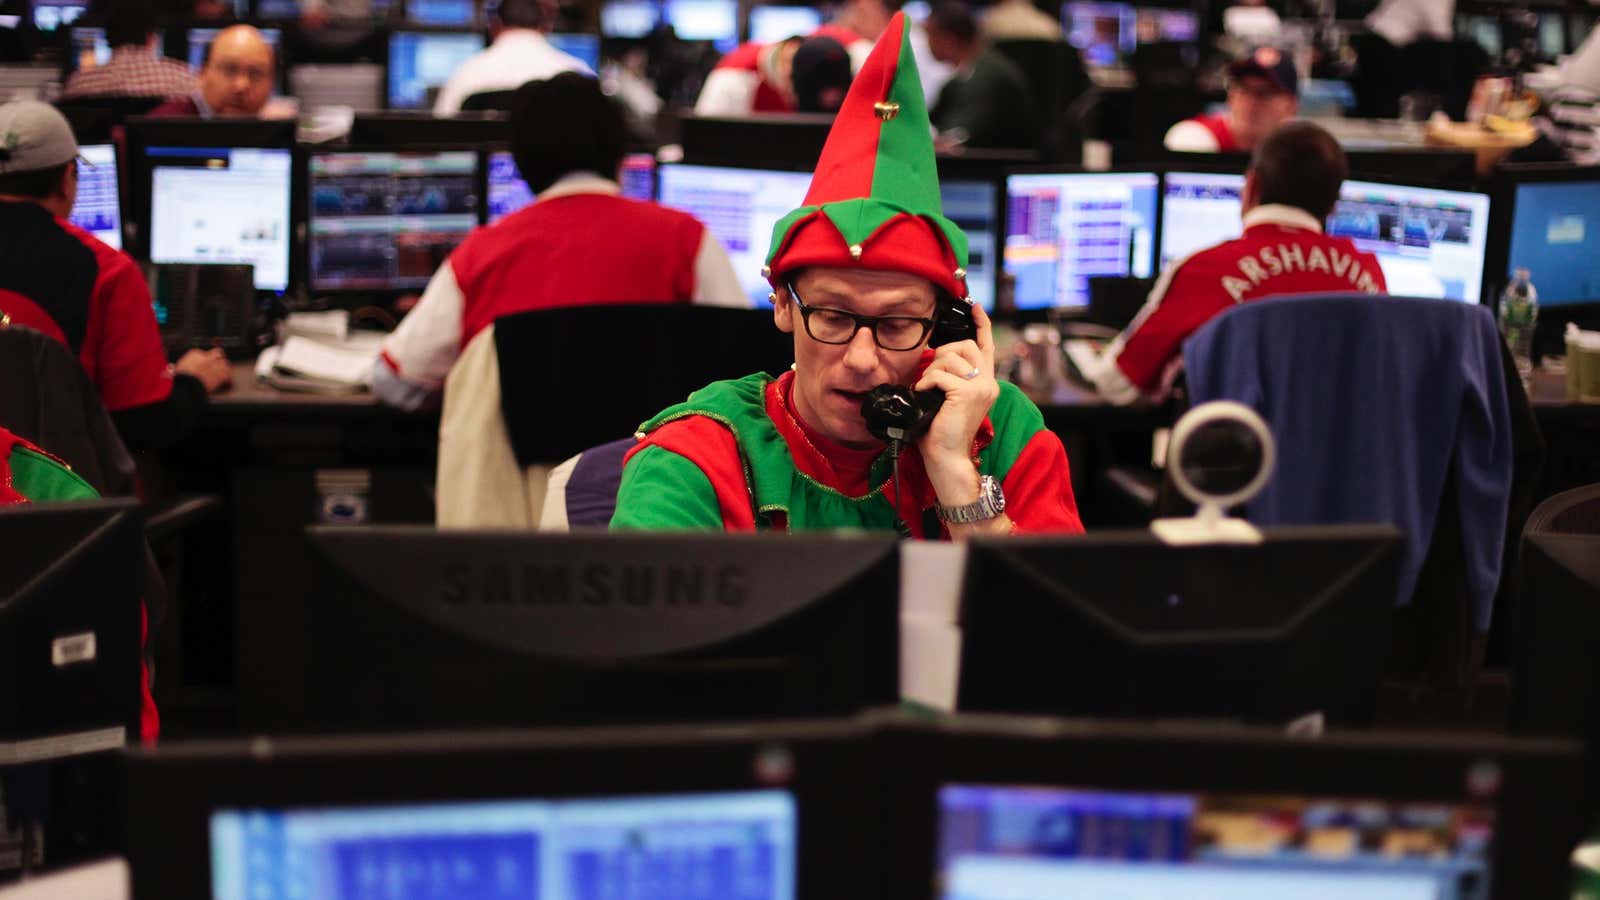 Christmas came early on Wall Street.